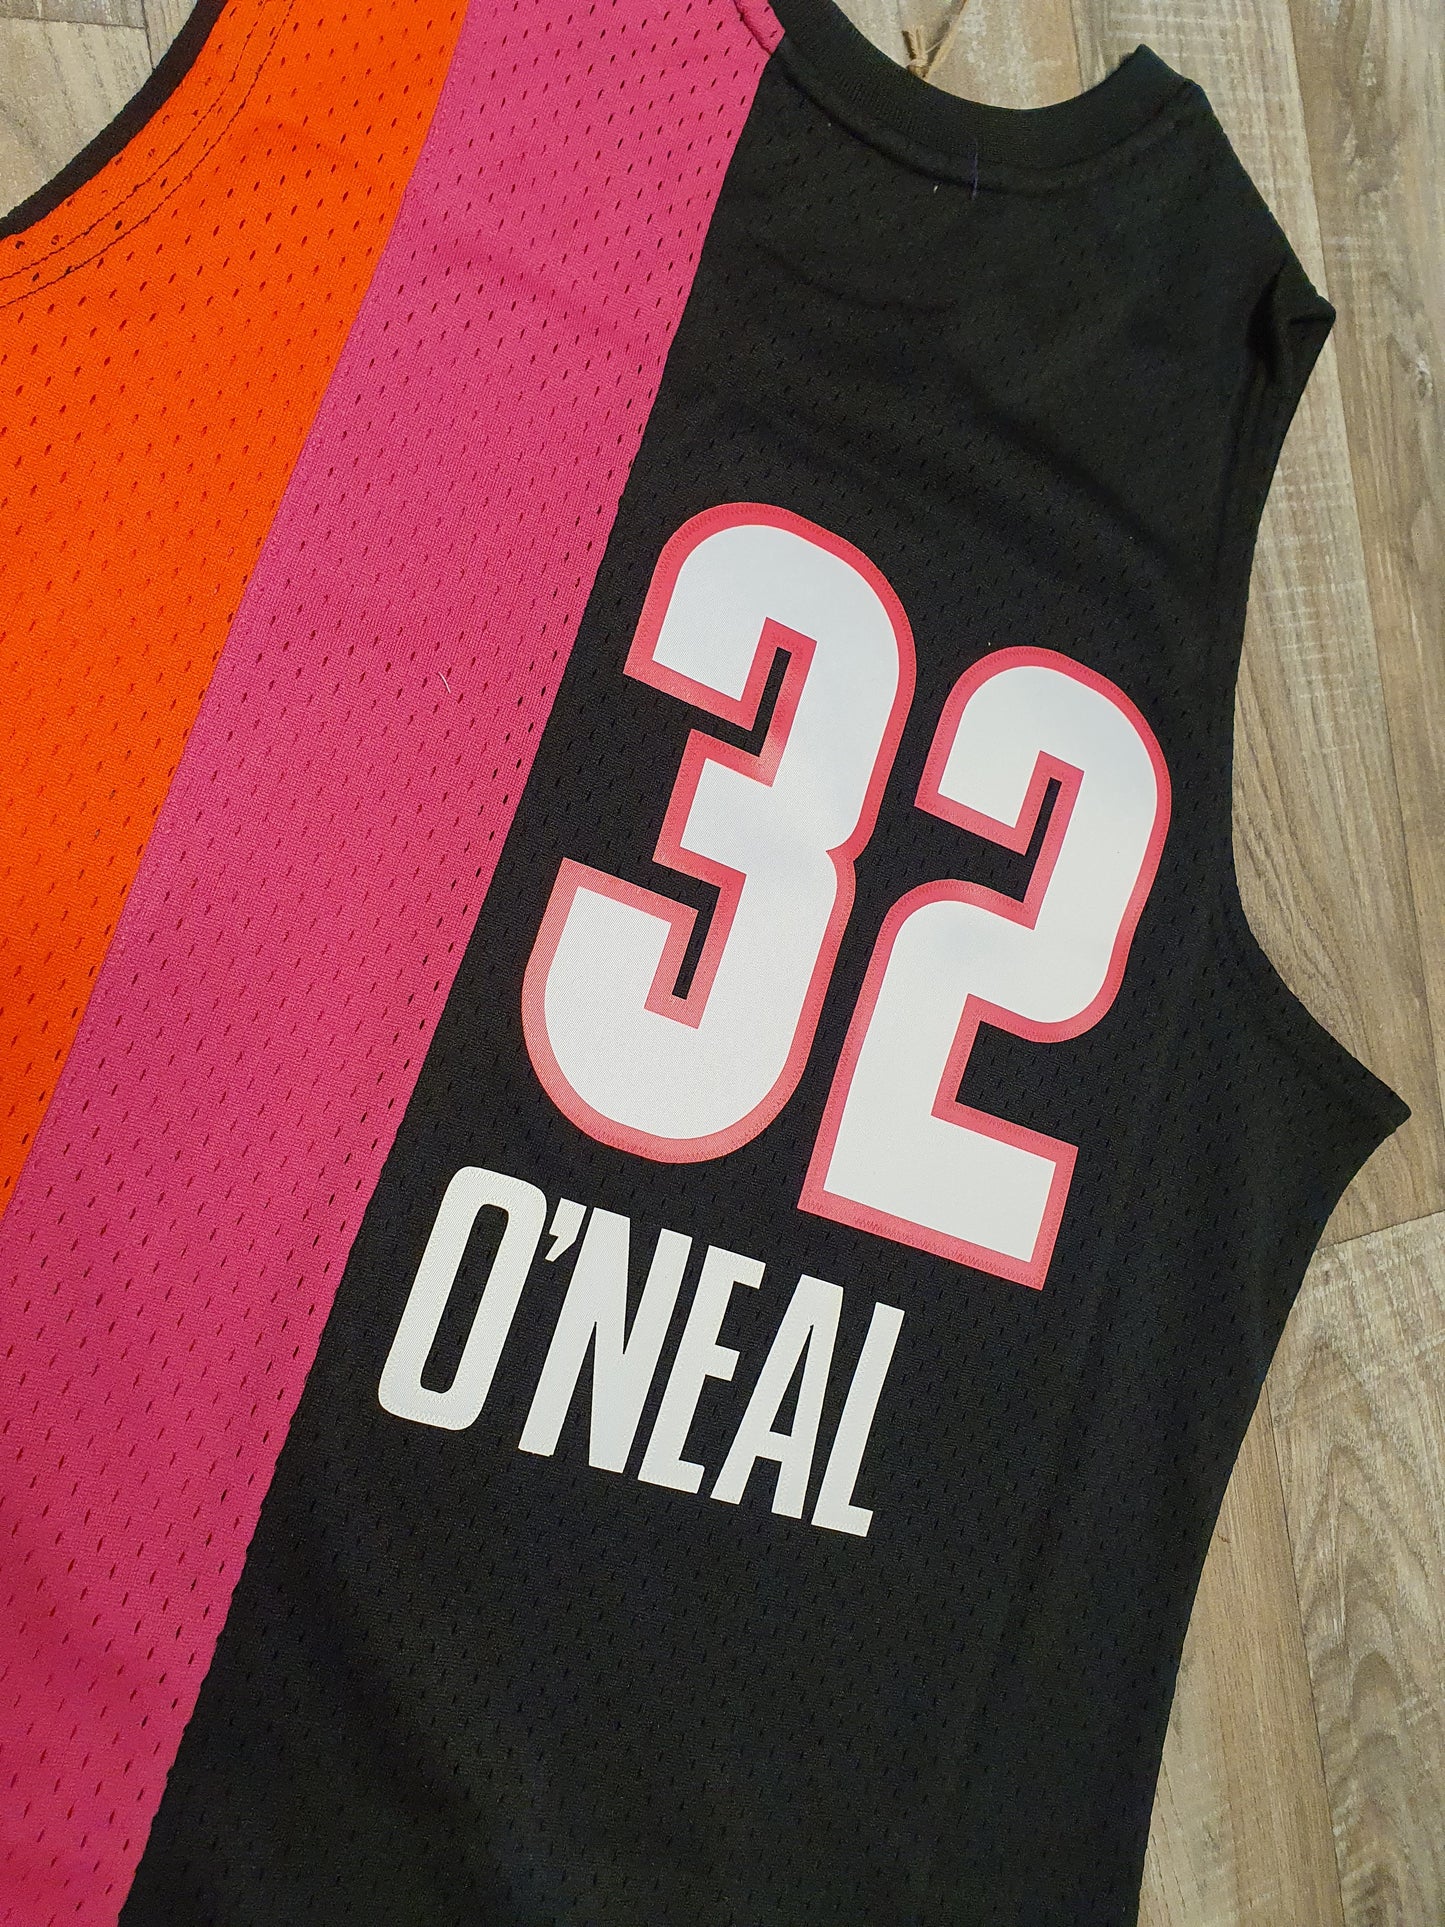 Shaquille O'Neal Miami Heat Alternate 2005-06 Jersey